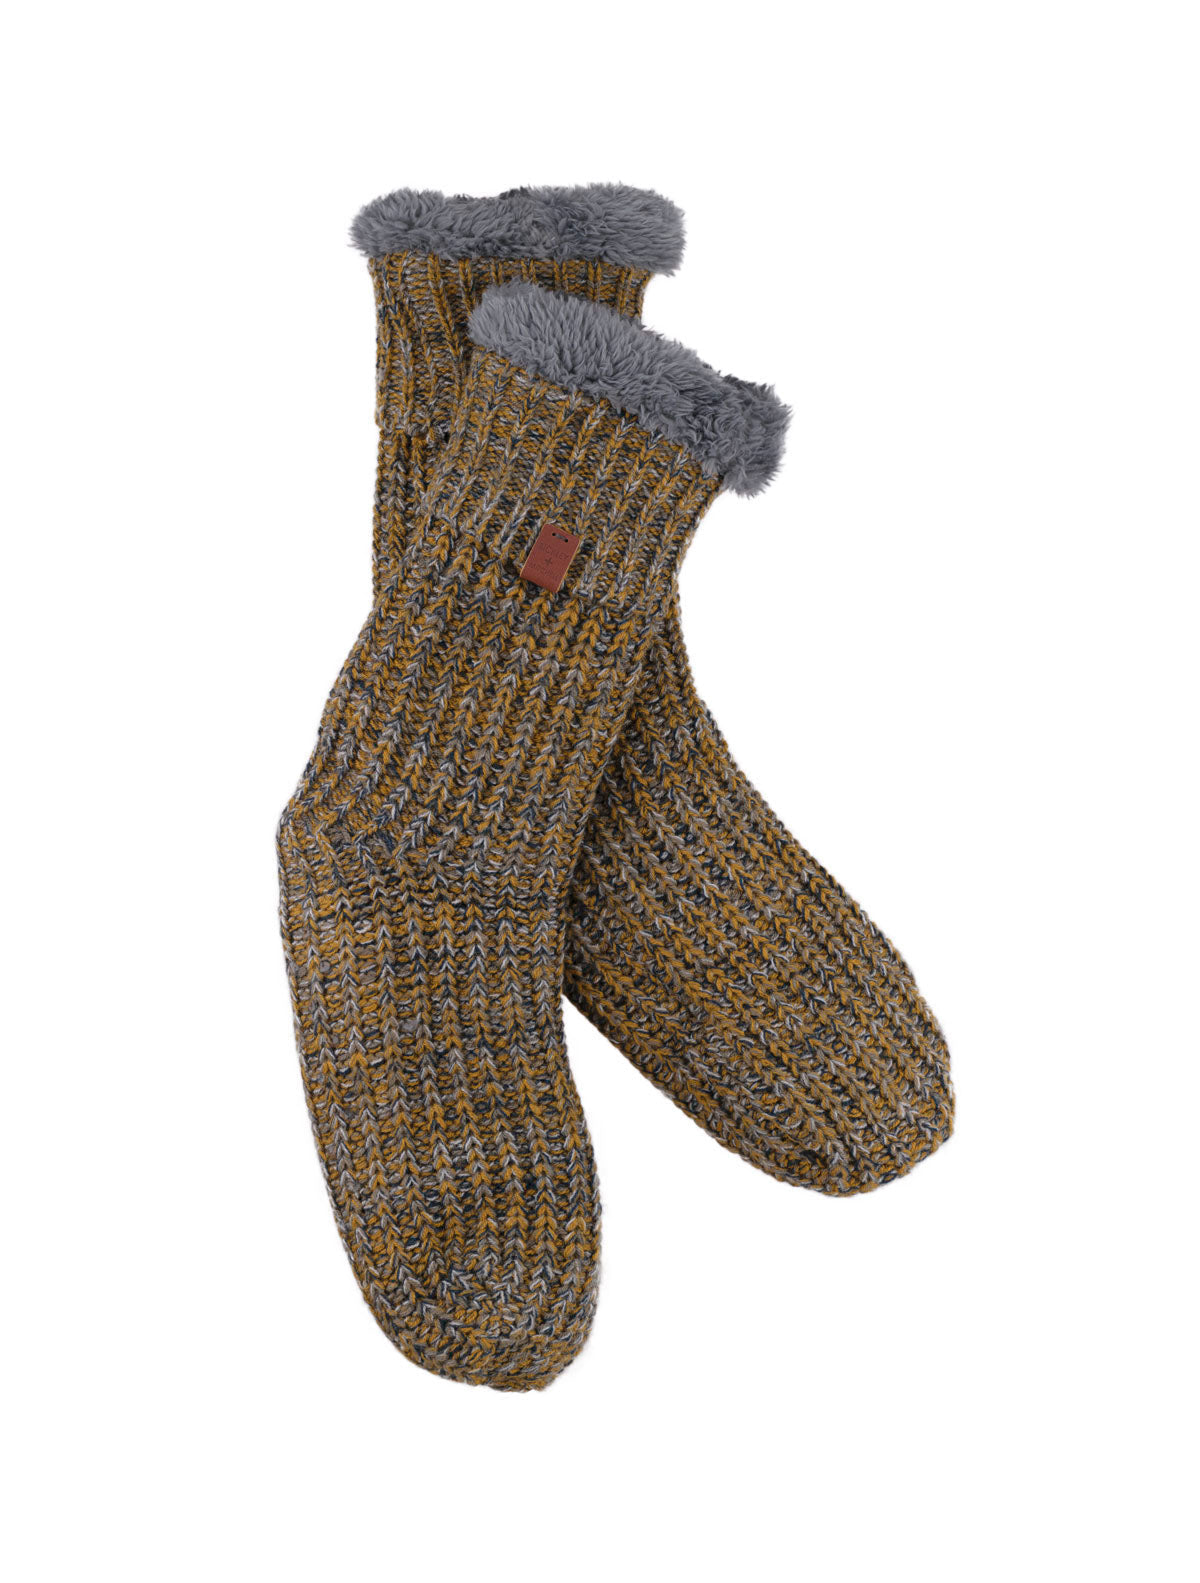 Tibetan Socks: Wool Slipper Socks, Hand Knit Wool Socks, Handmade Socks